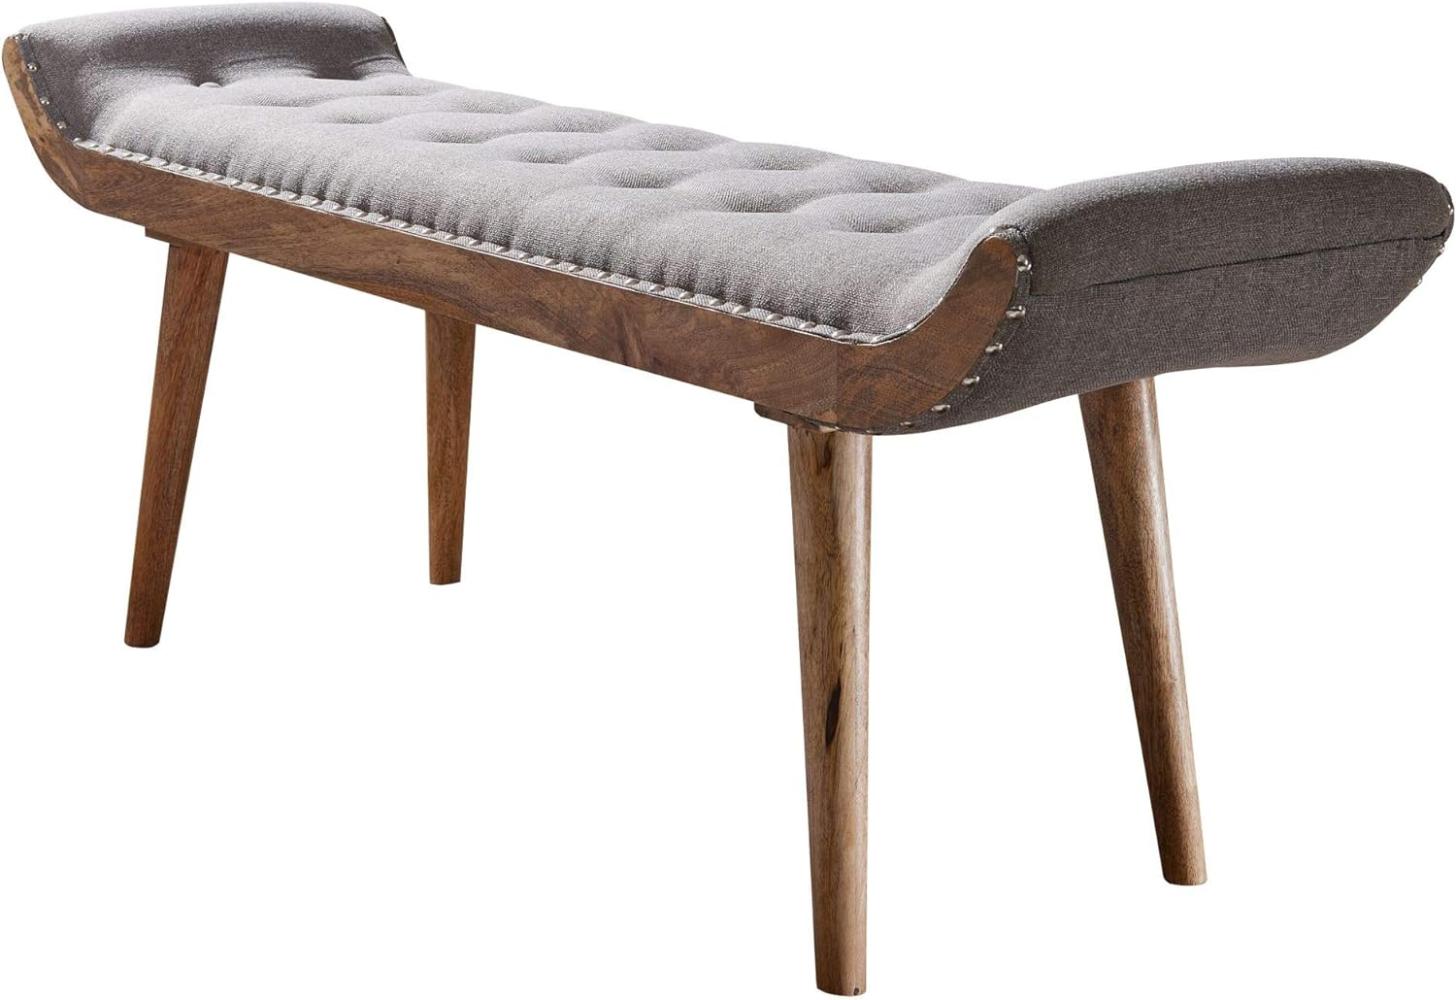 KADIMA DESIGN Sitzbank aus Massivholz und Leder/Stoff - Modernes Design, Chesterfield-Muster, hohe Belastbarkeit. Material: Stoff Bild 1